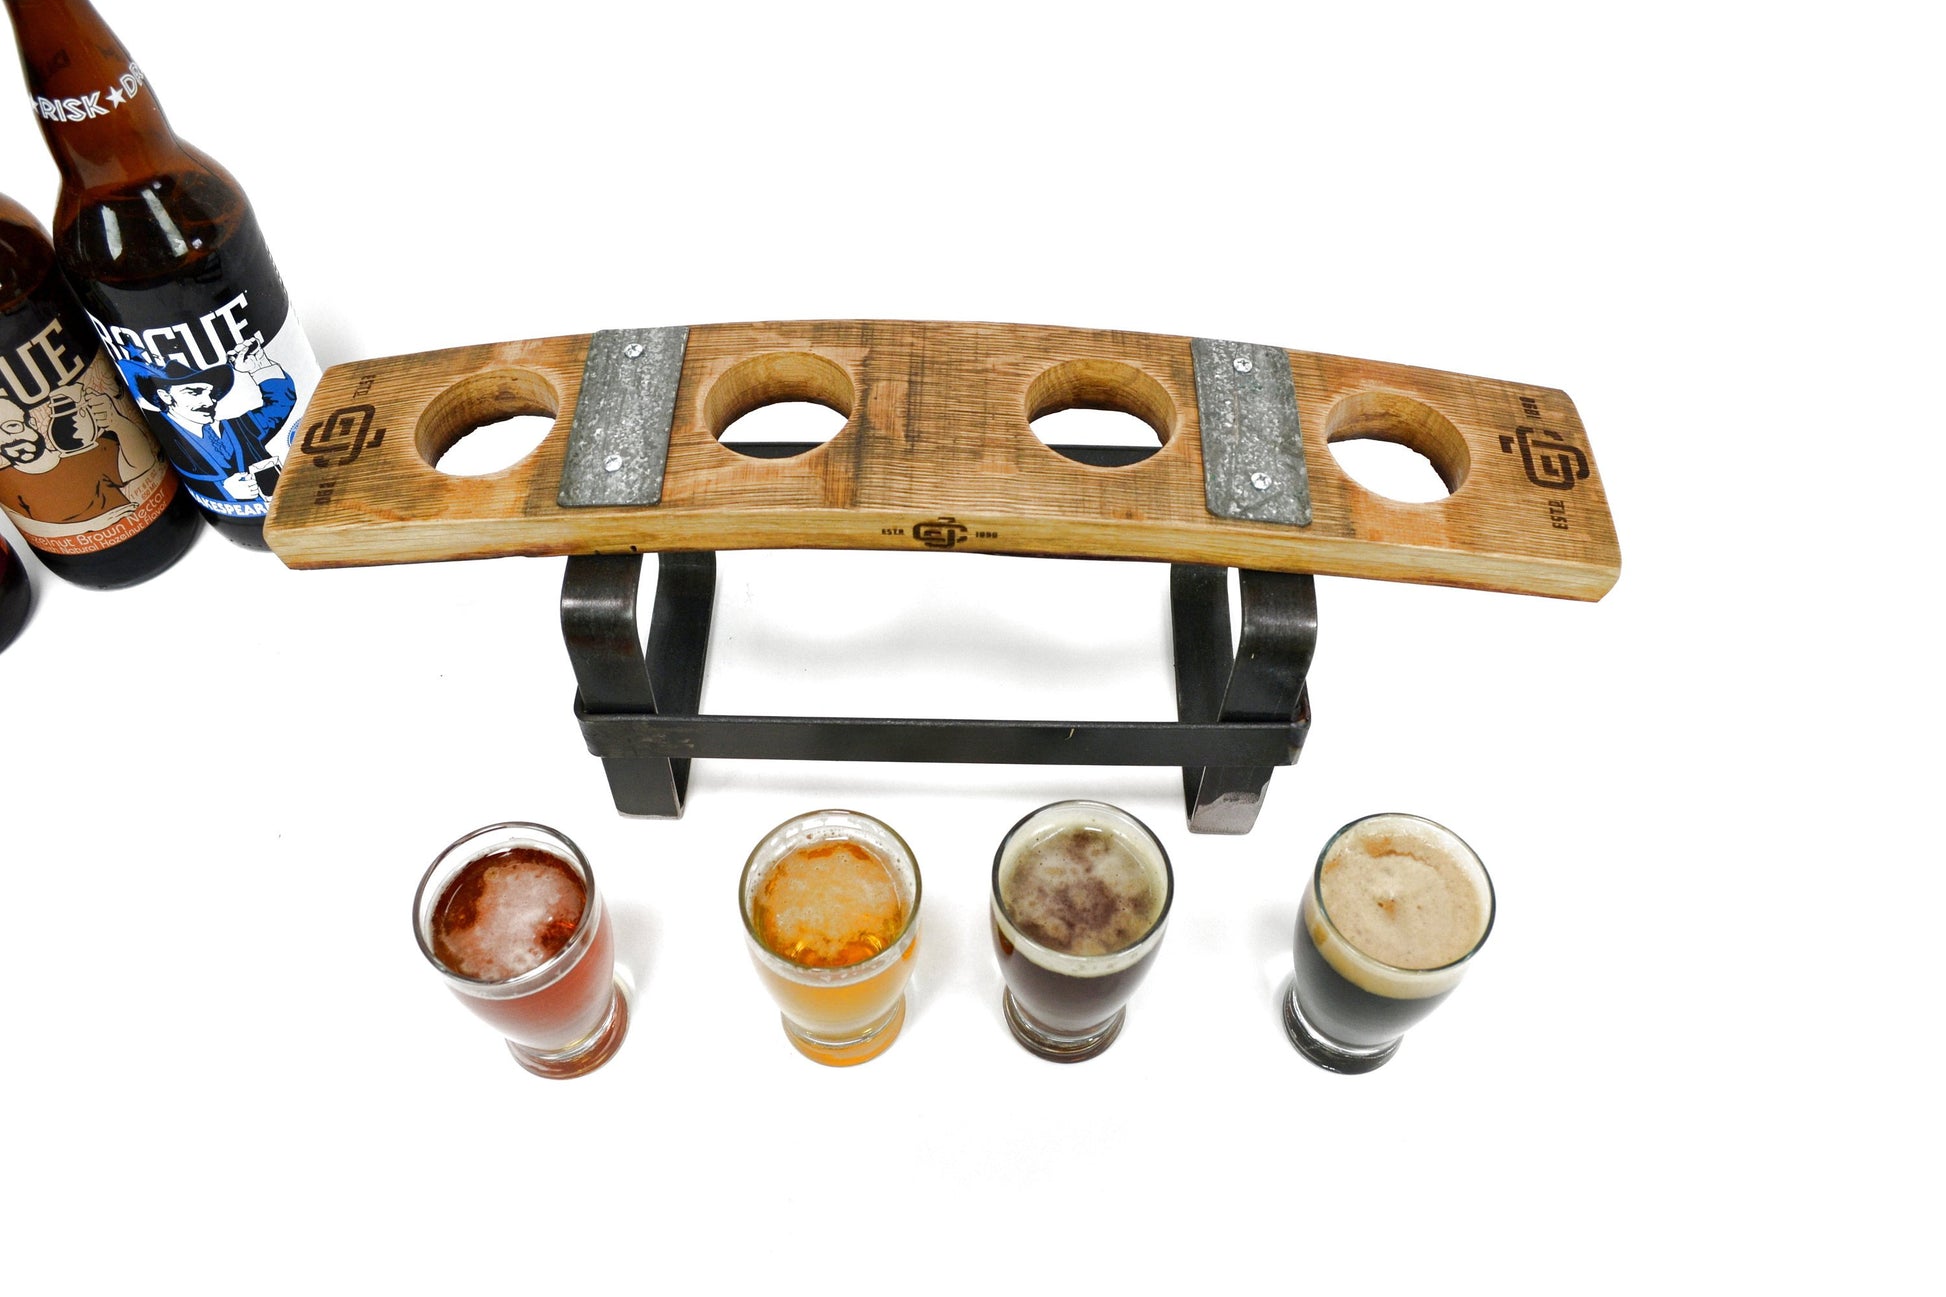 SAMPLER - Safata - 4 Glass Beer Flight Sampler paddle 